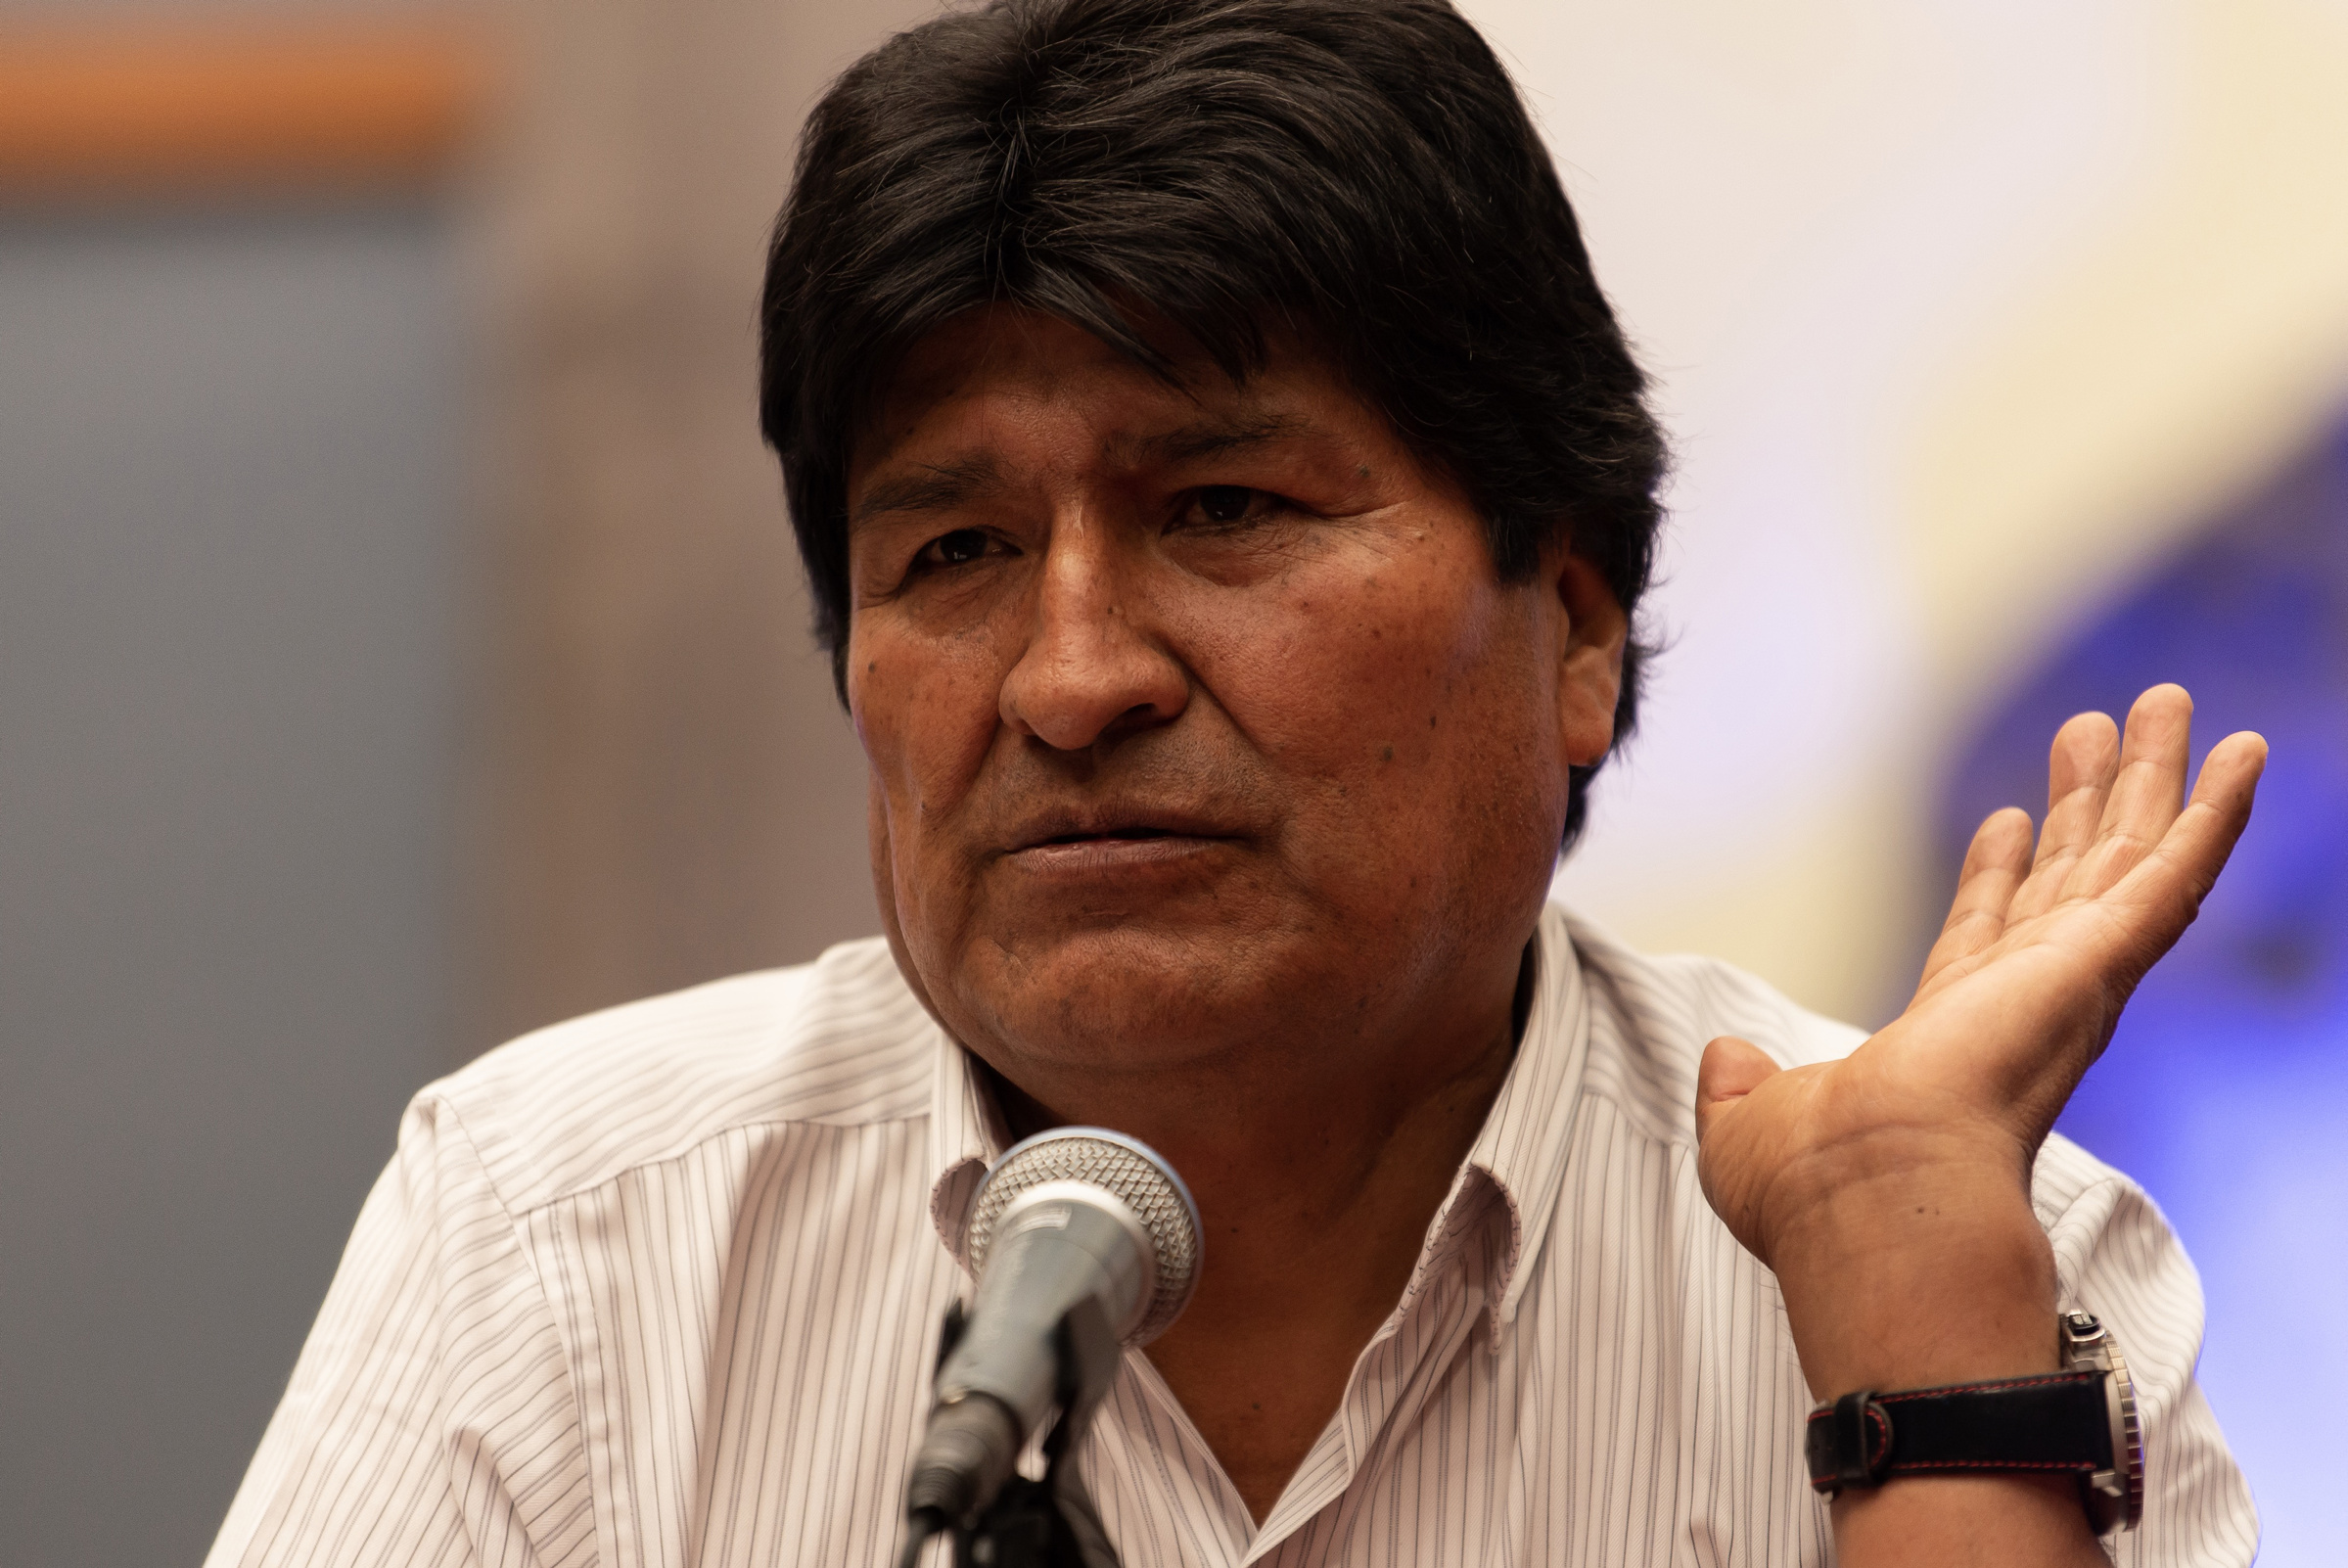 Aceptan demanda penal contra Evo Morales